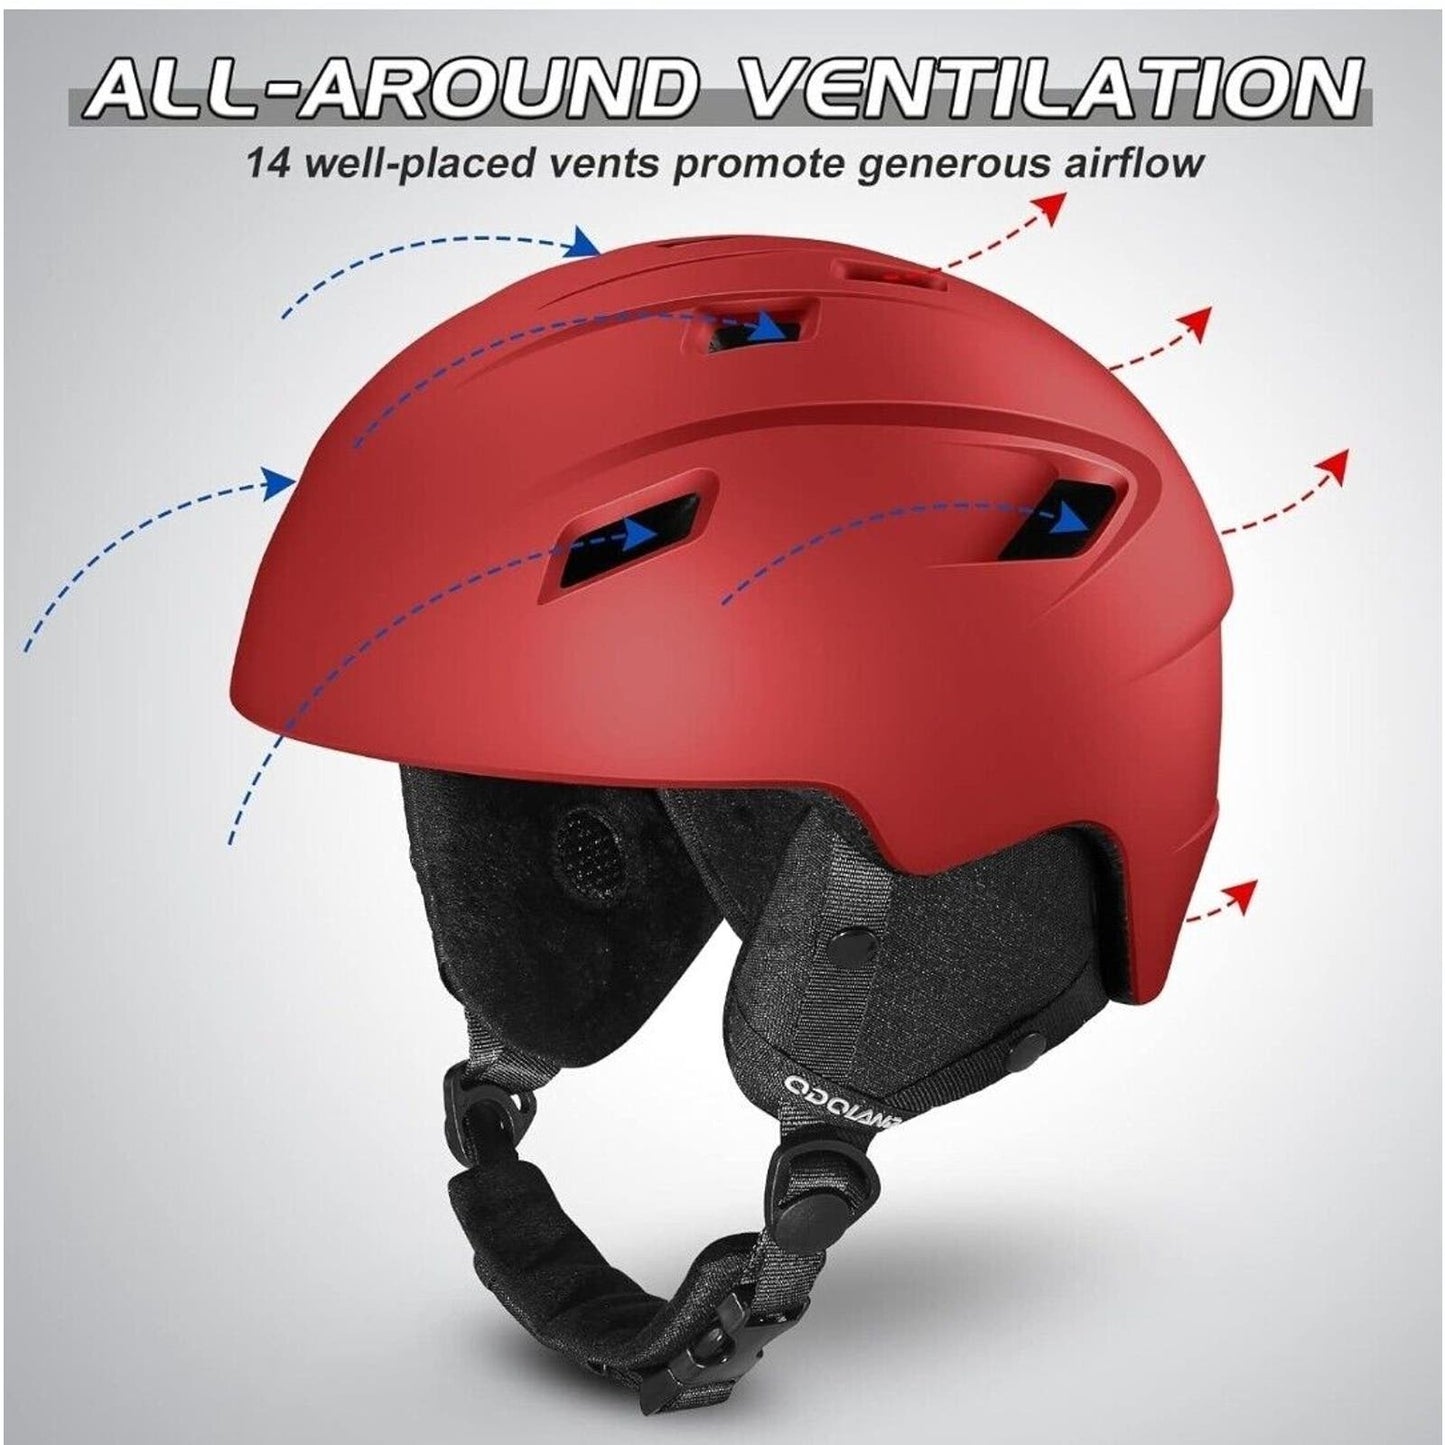 Ski Snowboard Helmet & Goggles Set, RED (SIZE: XS) Odoland